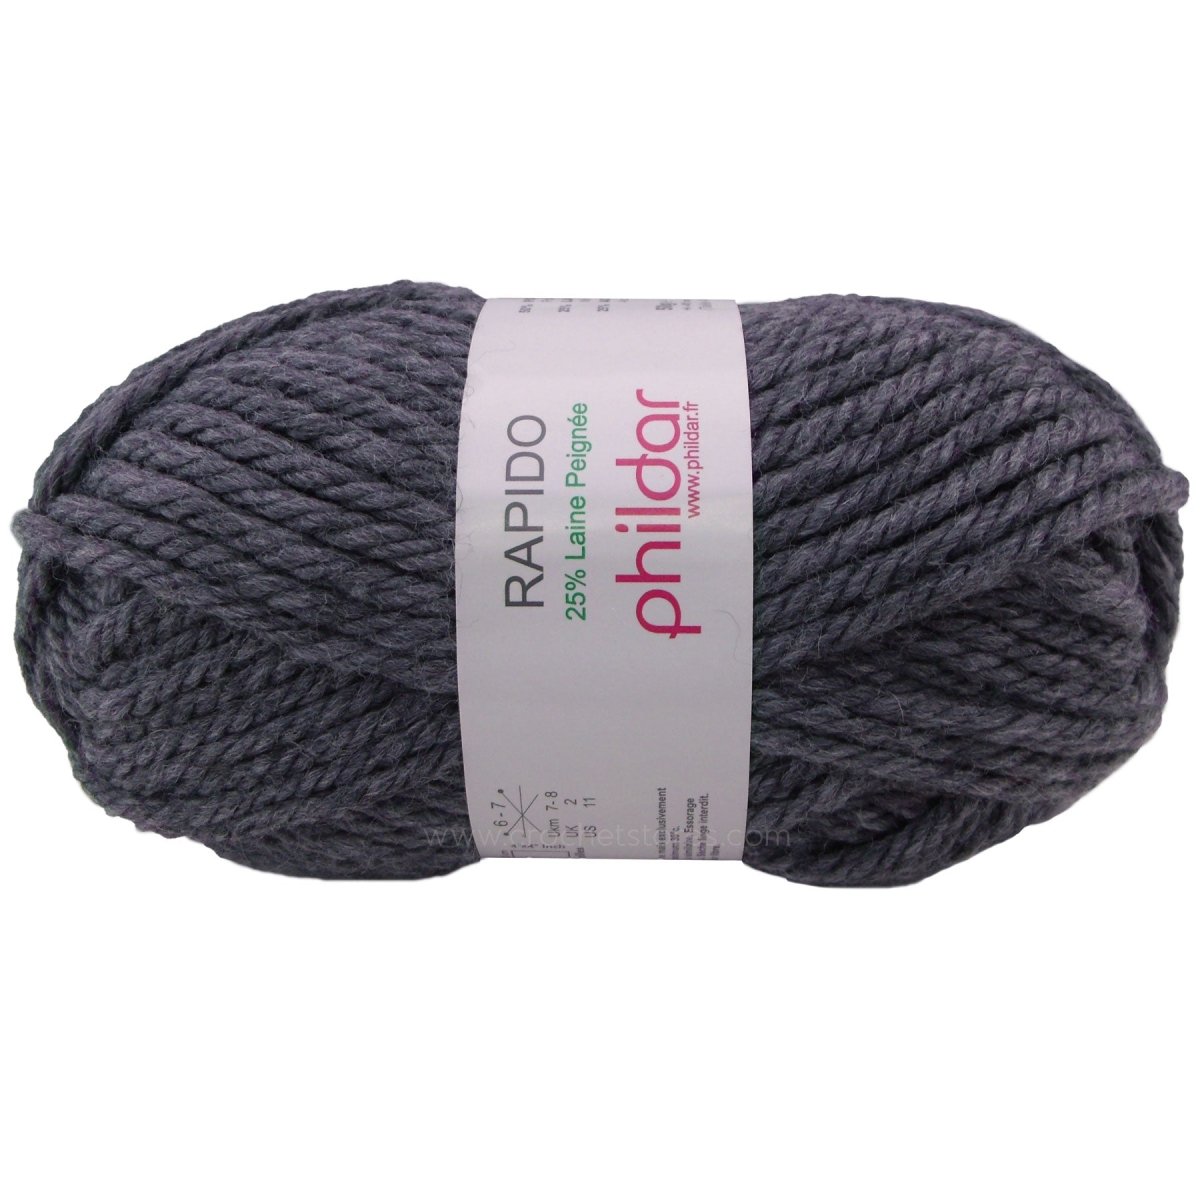 RAPIDO - Crochetstores500981-063307673323106